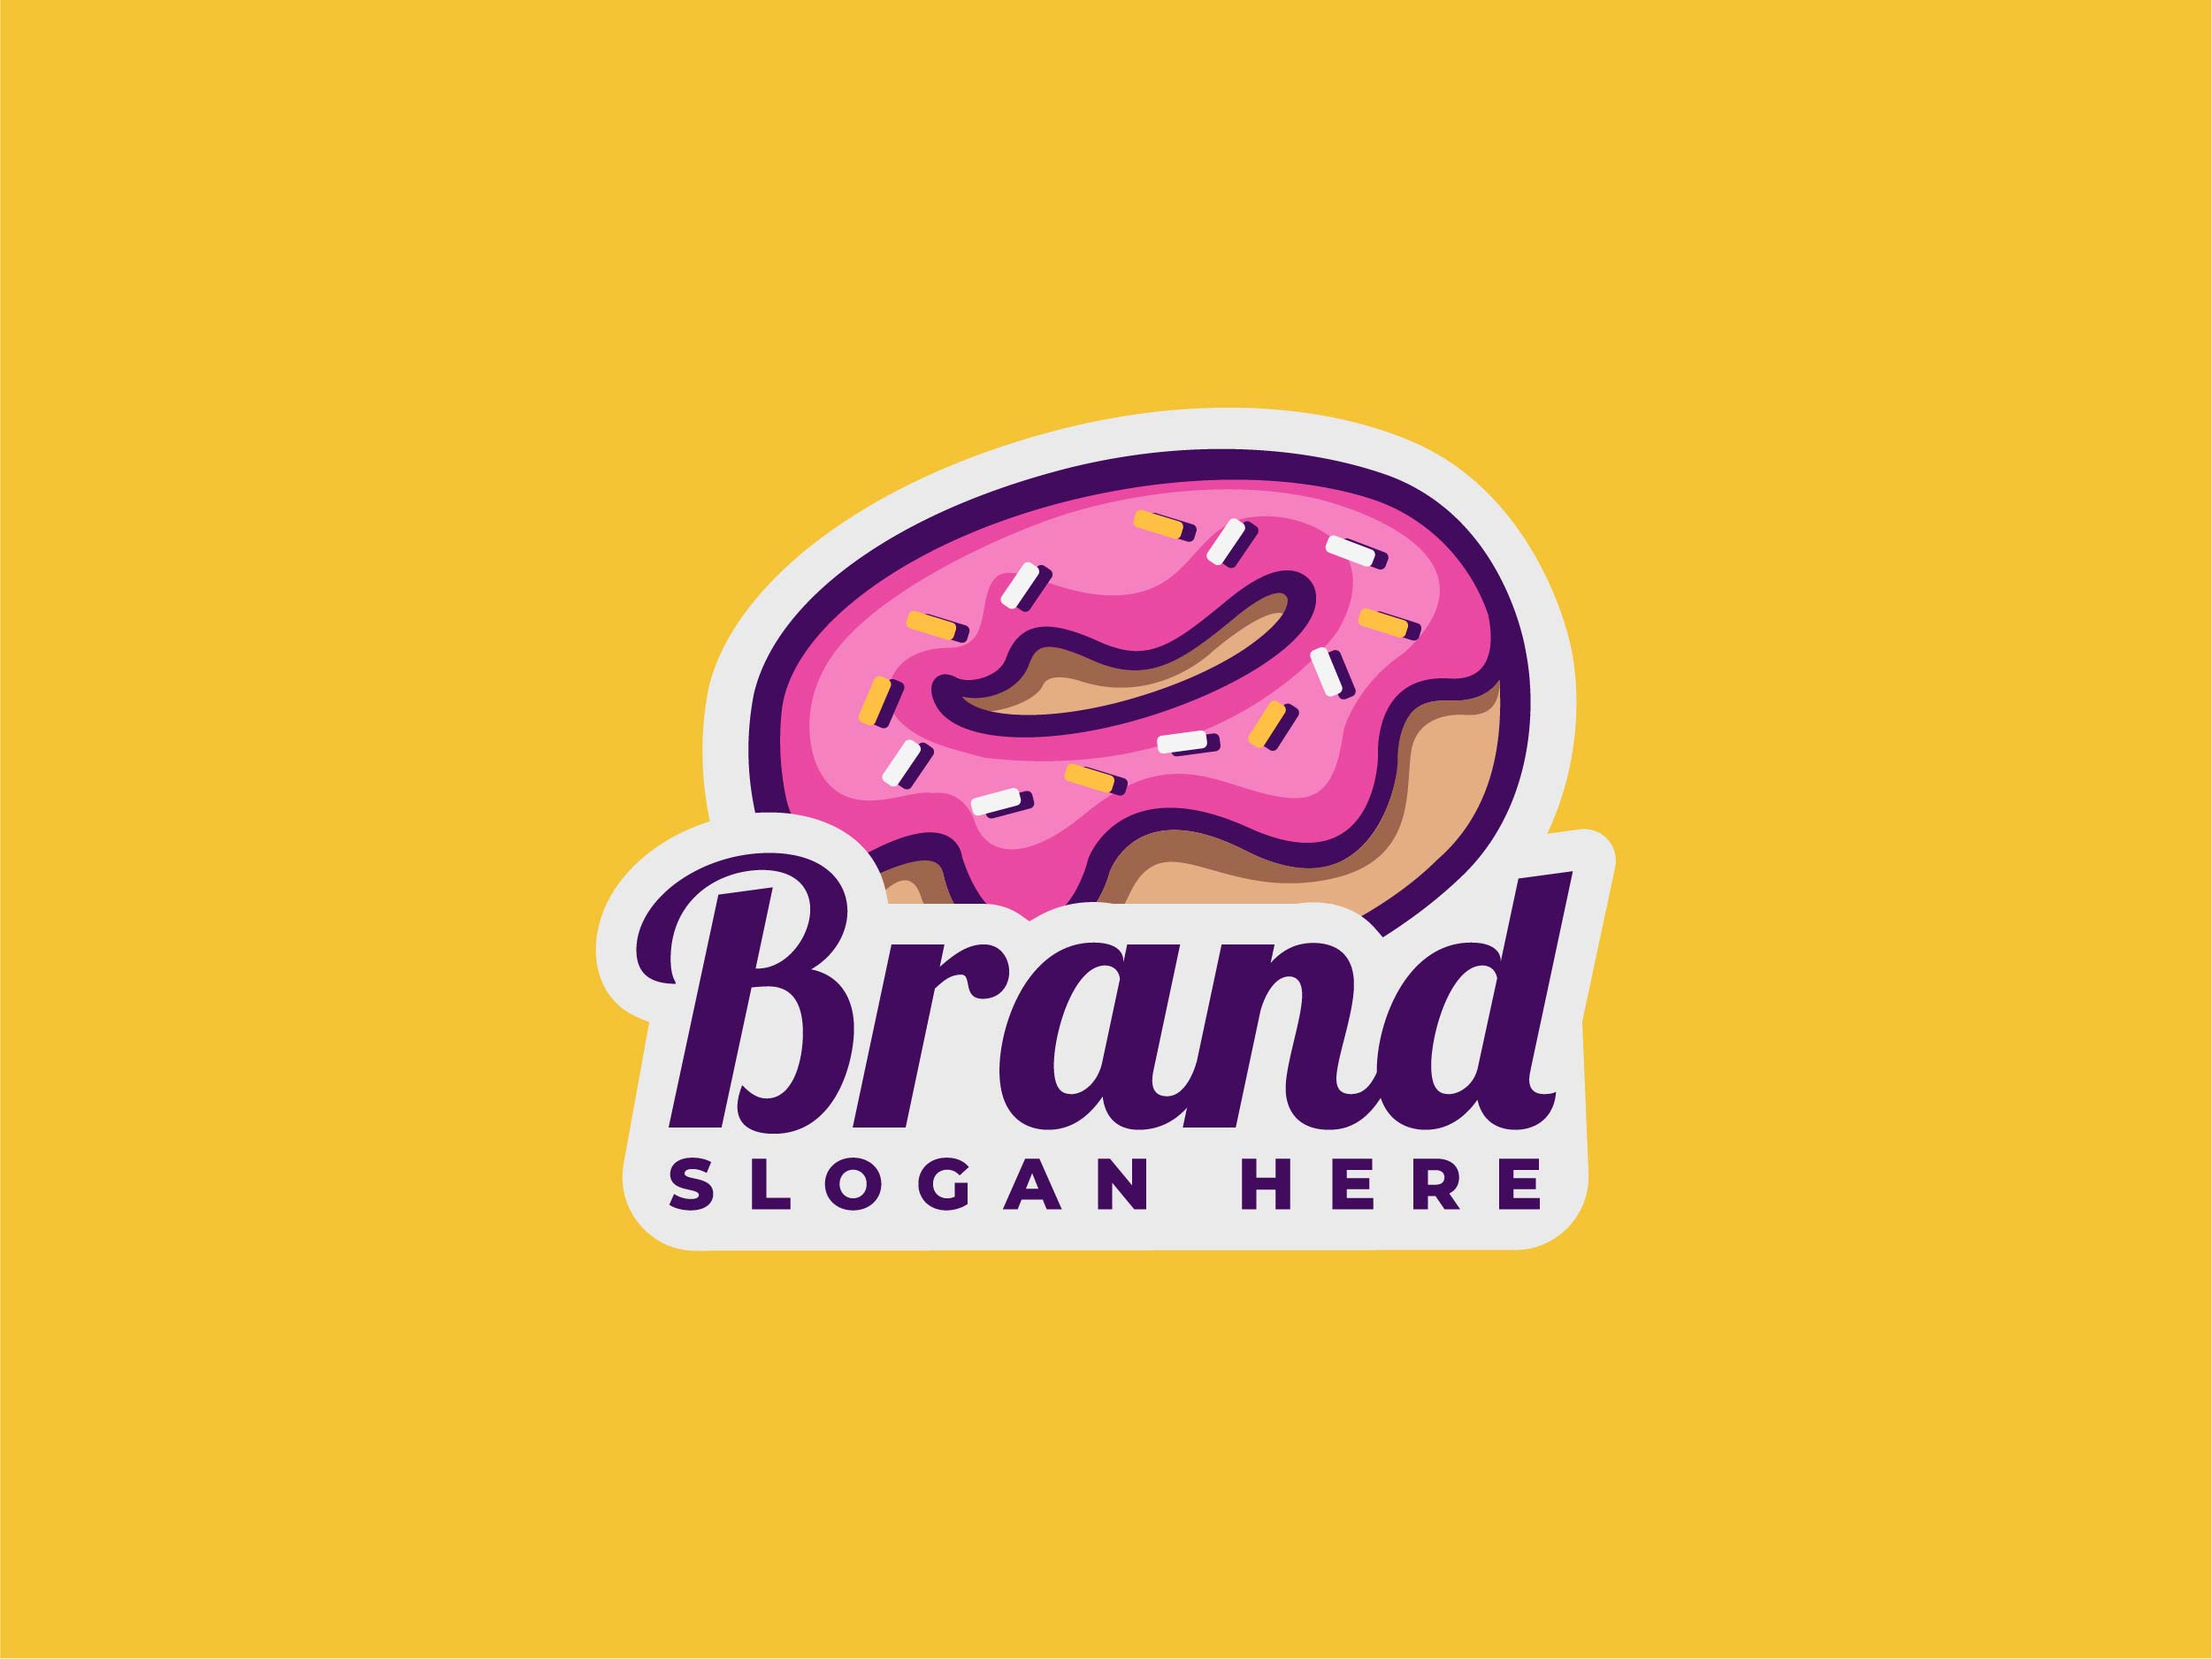 Donut-Logo